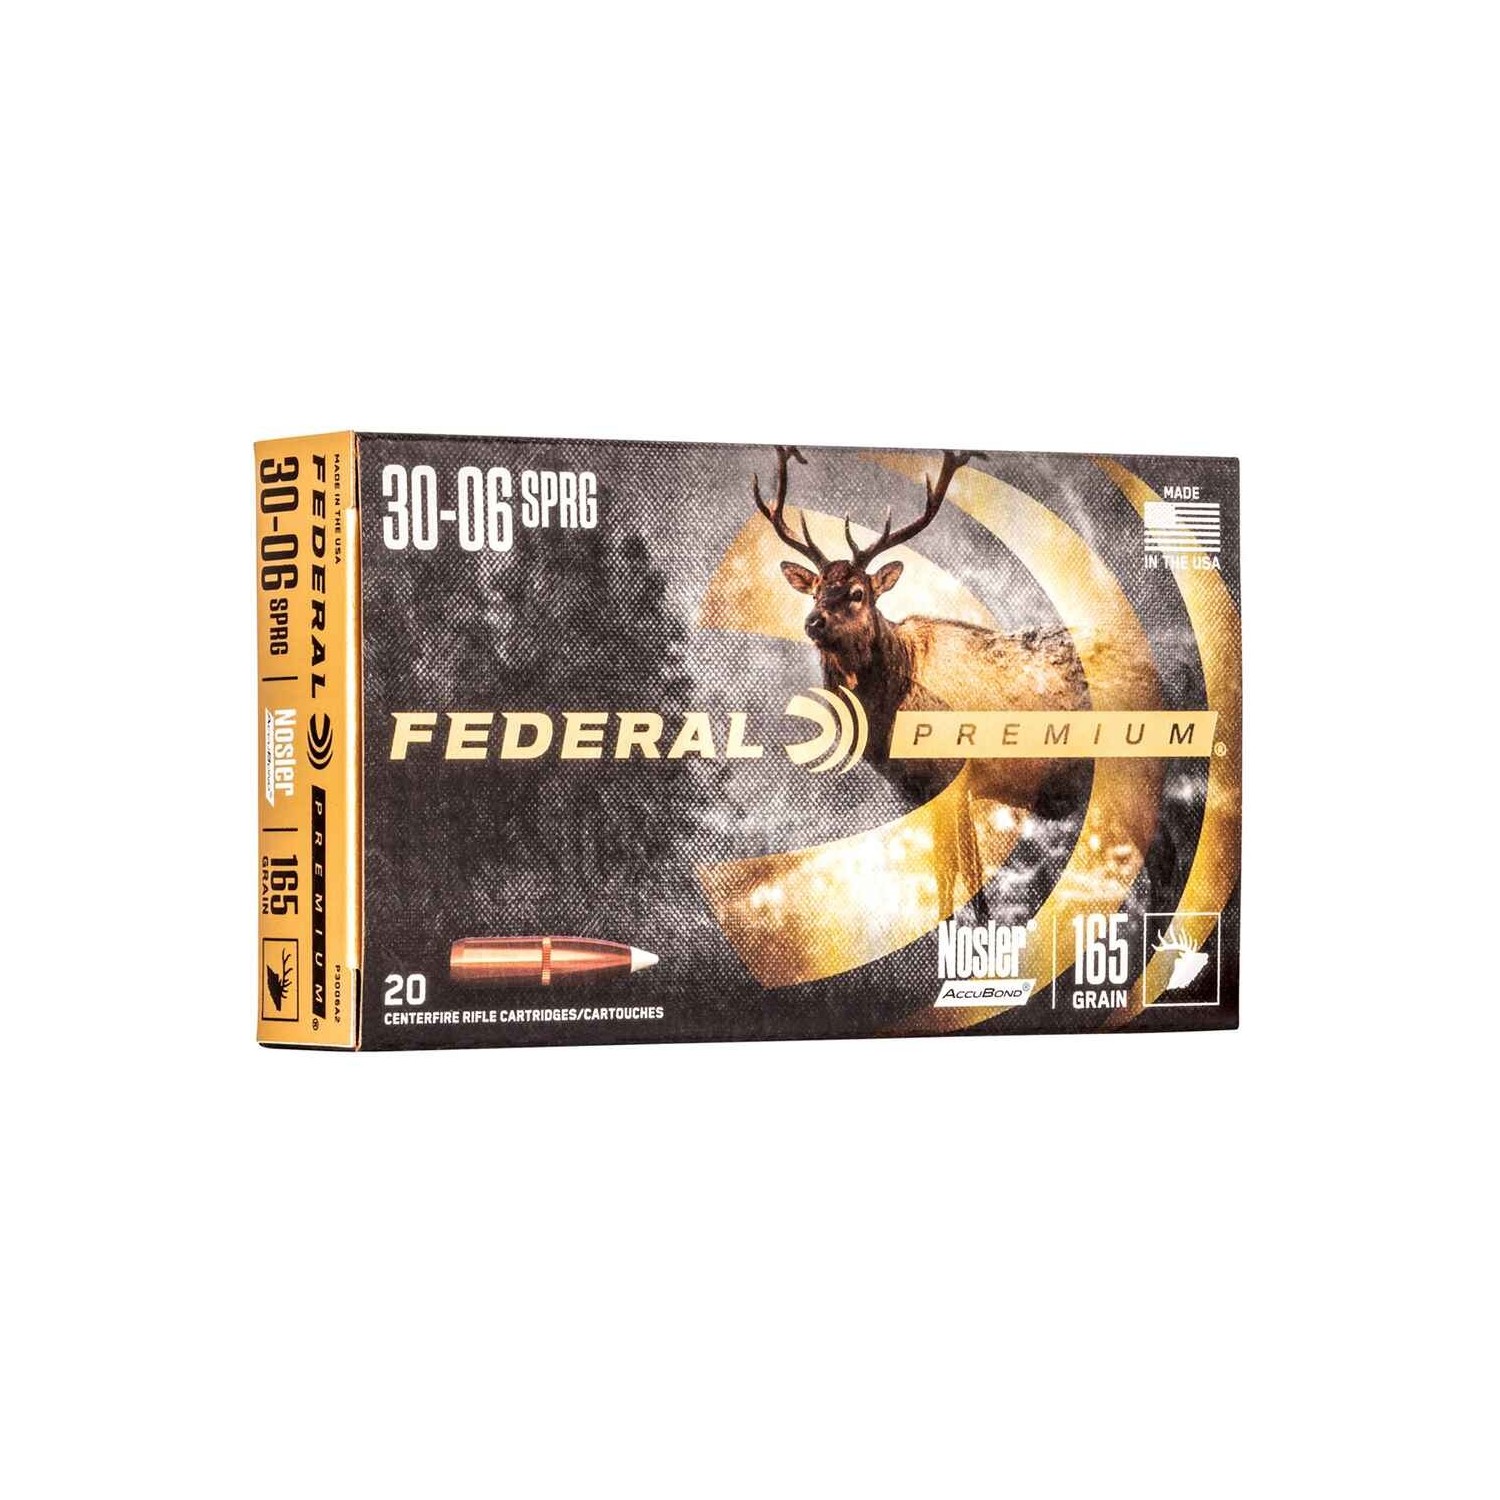 .30-06 Spr. Premium Nosler Accubond 165 grs. Federal Ammunition